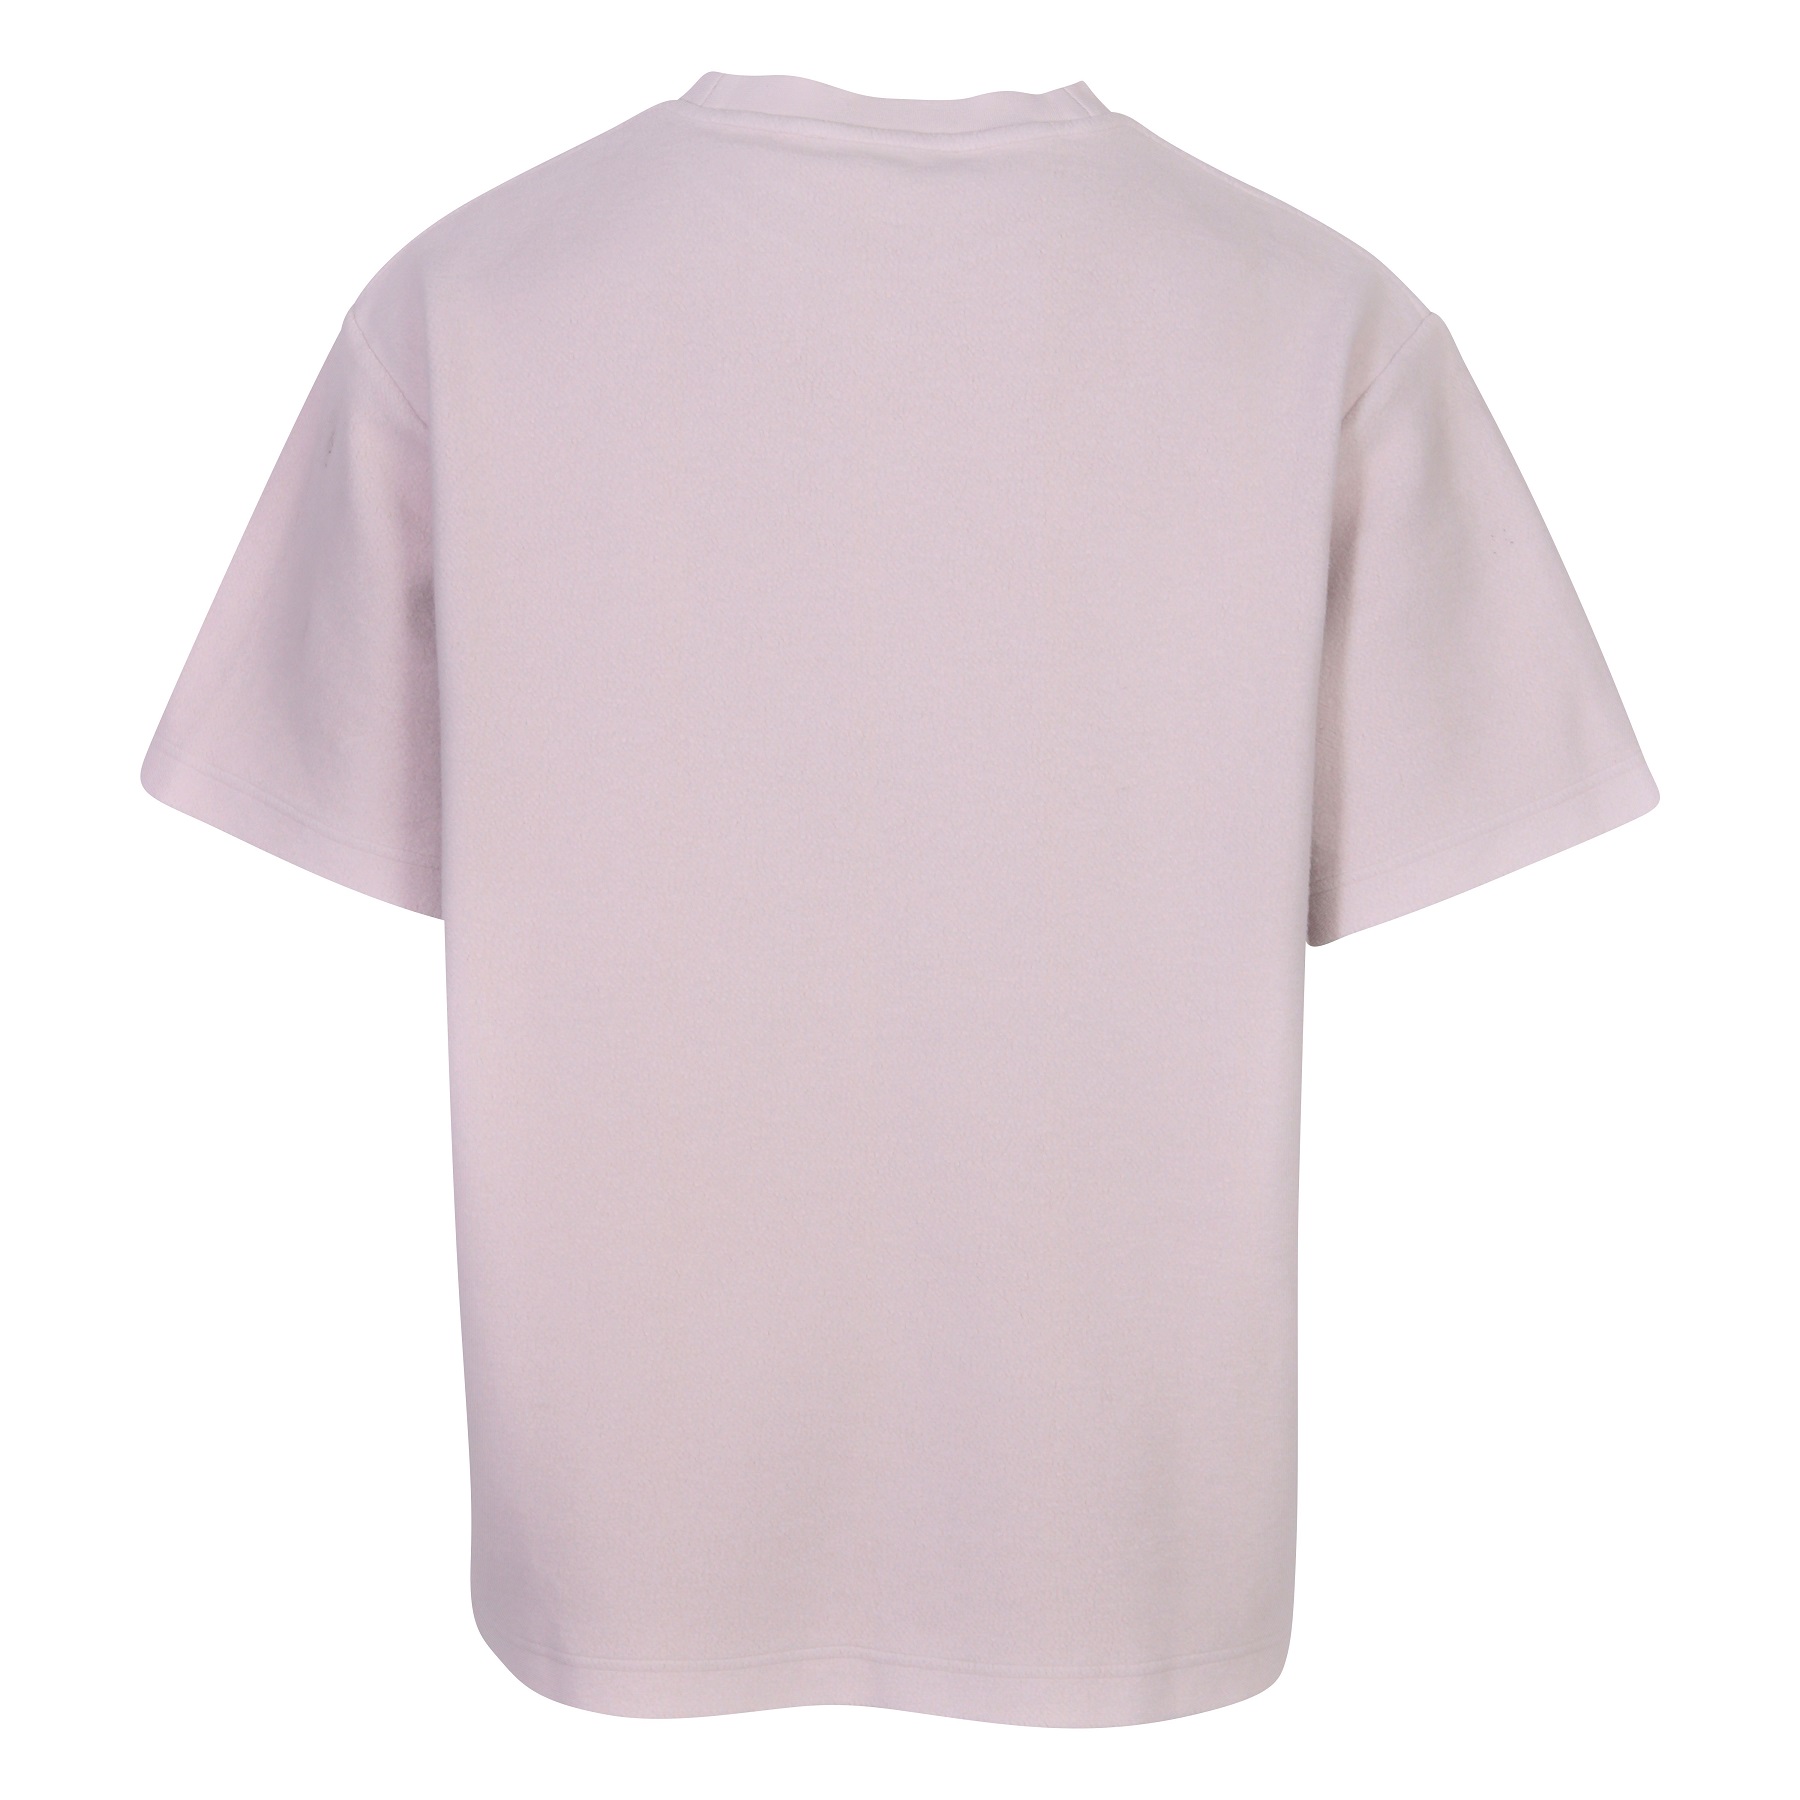 Acne Studios Heavy Cotton Logo T-Shirt in Pale Lilac M